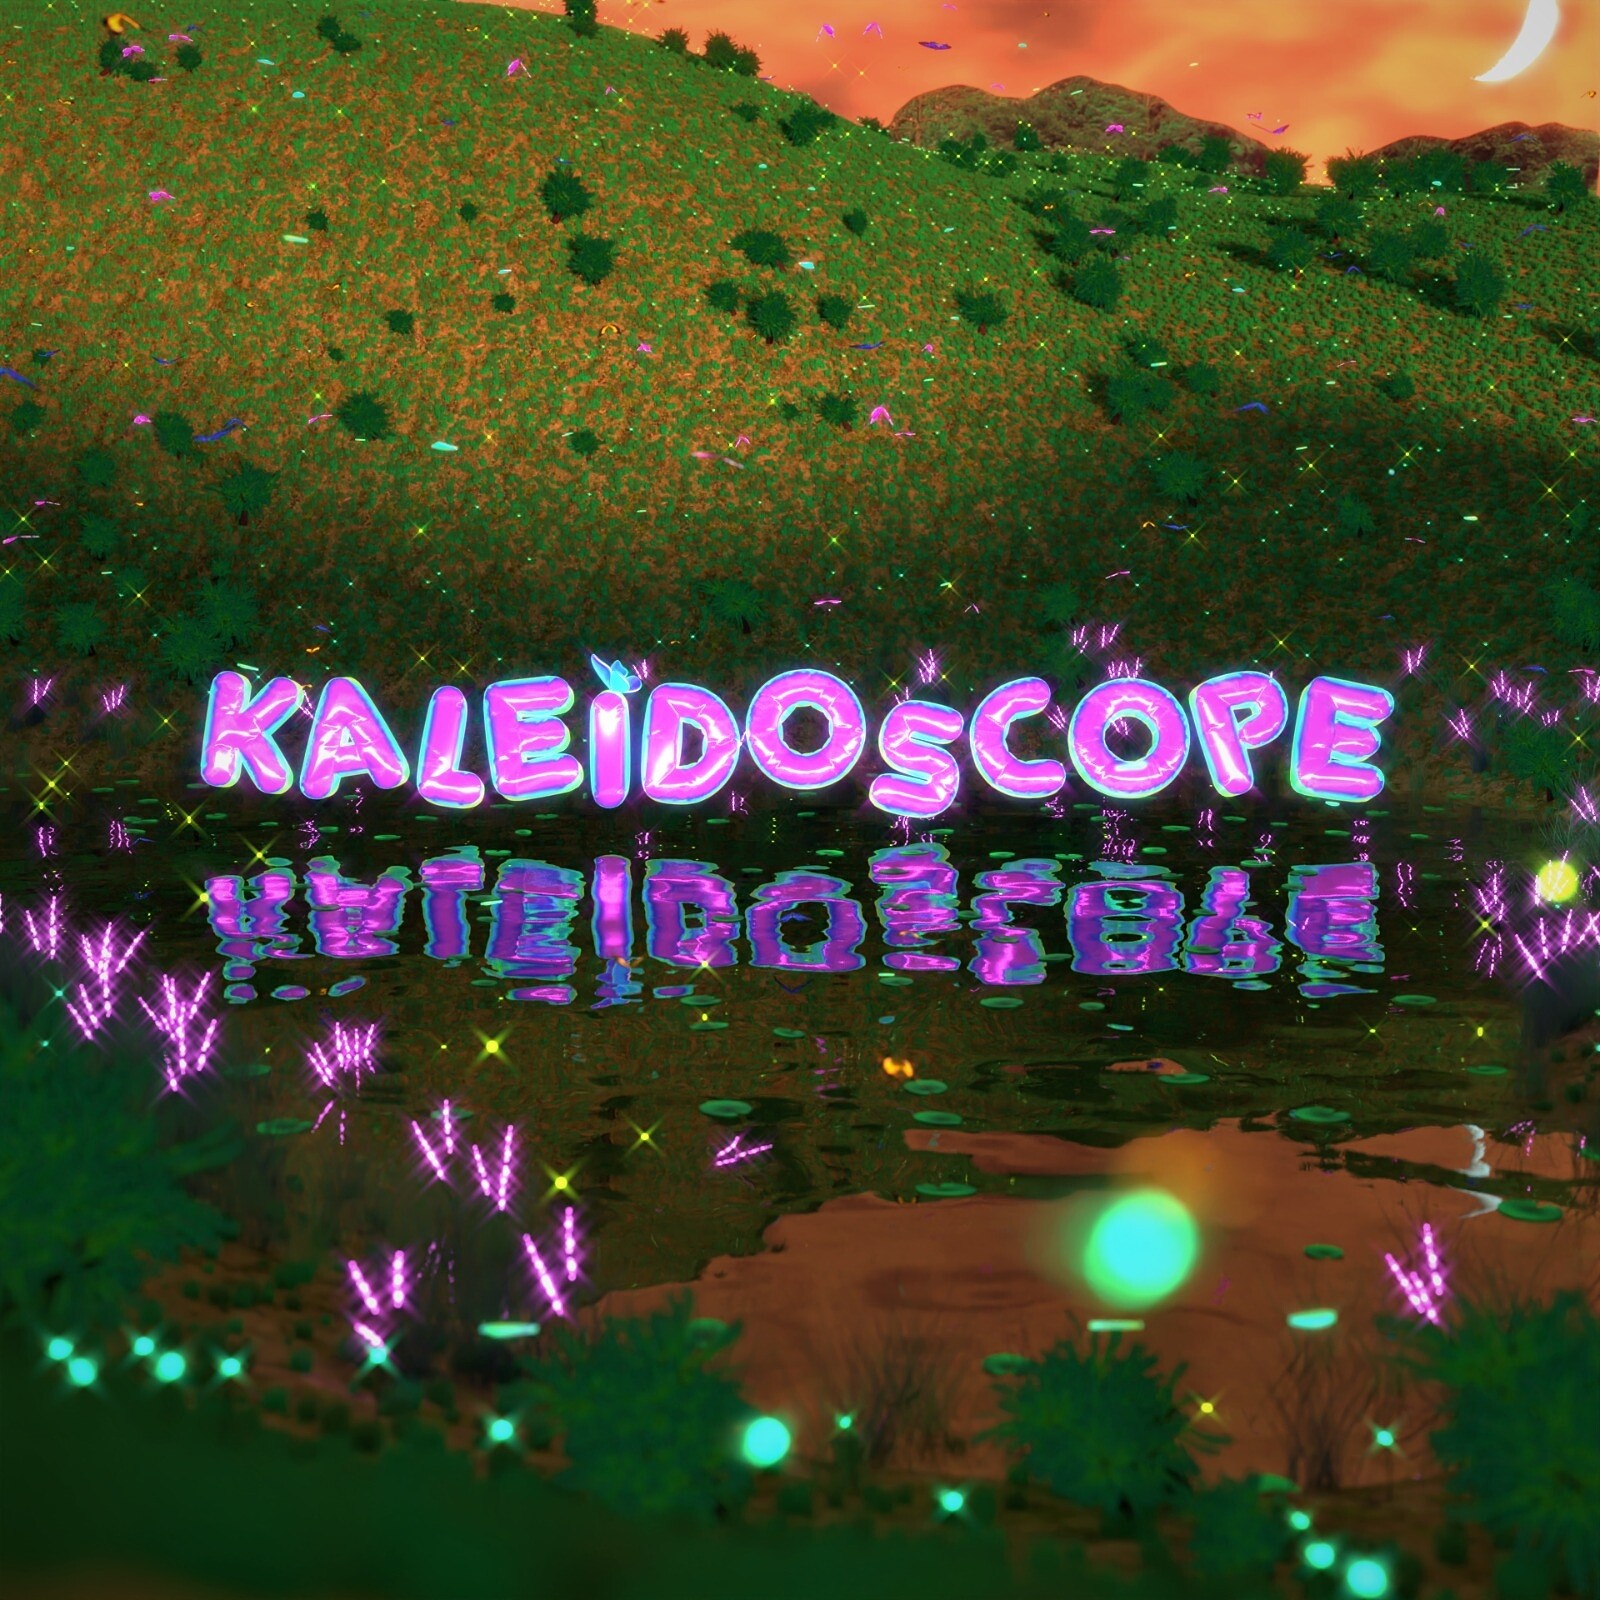 Kaleidoscope at New Secret Location